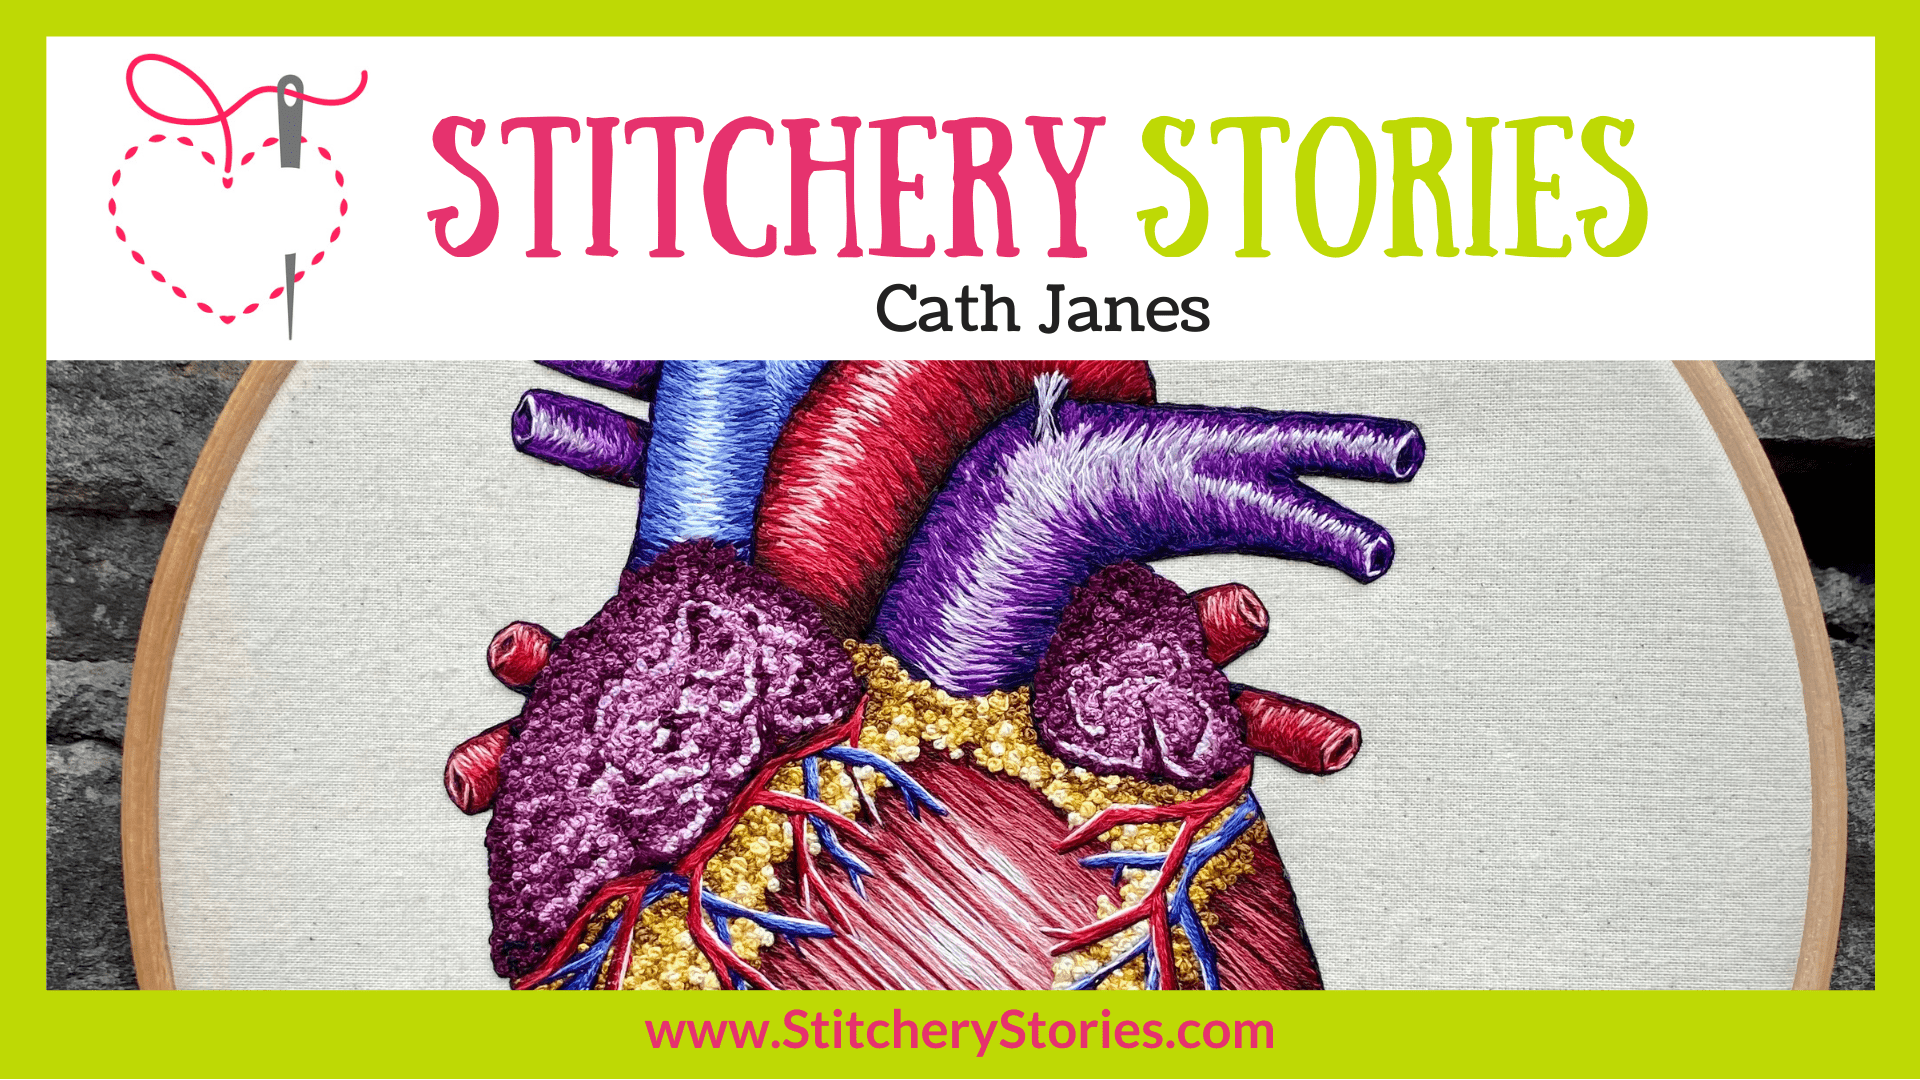 cath janes guest Stitchery Stories textile art podcast Wide Art